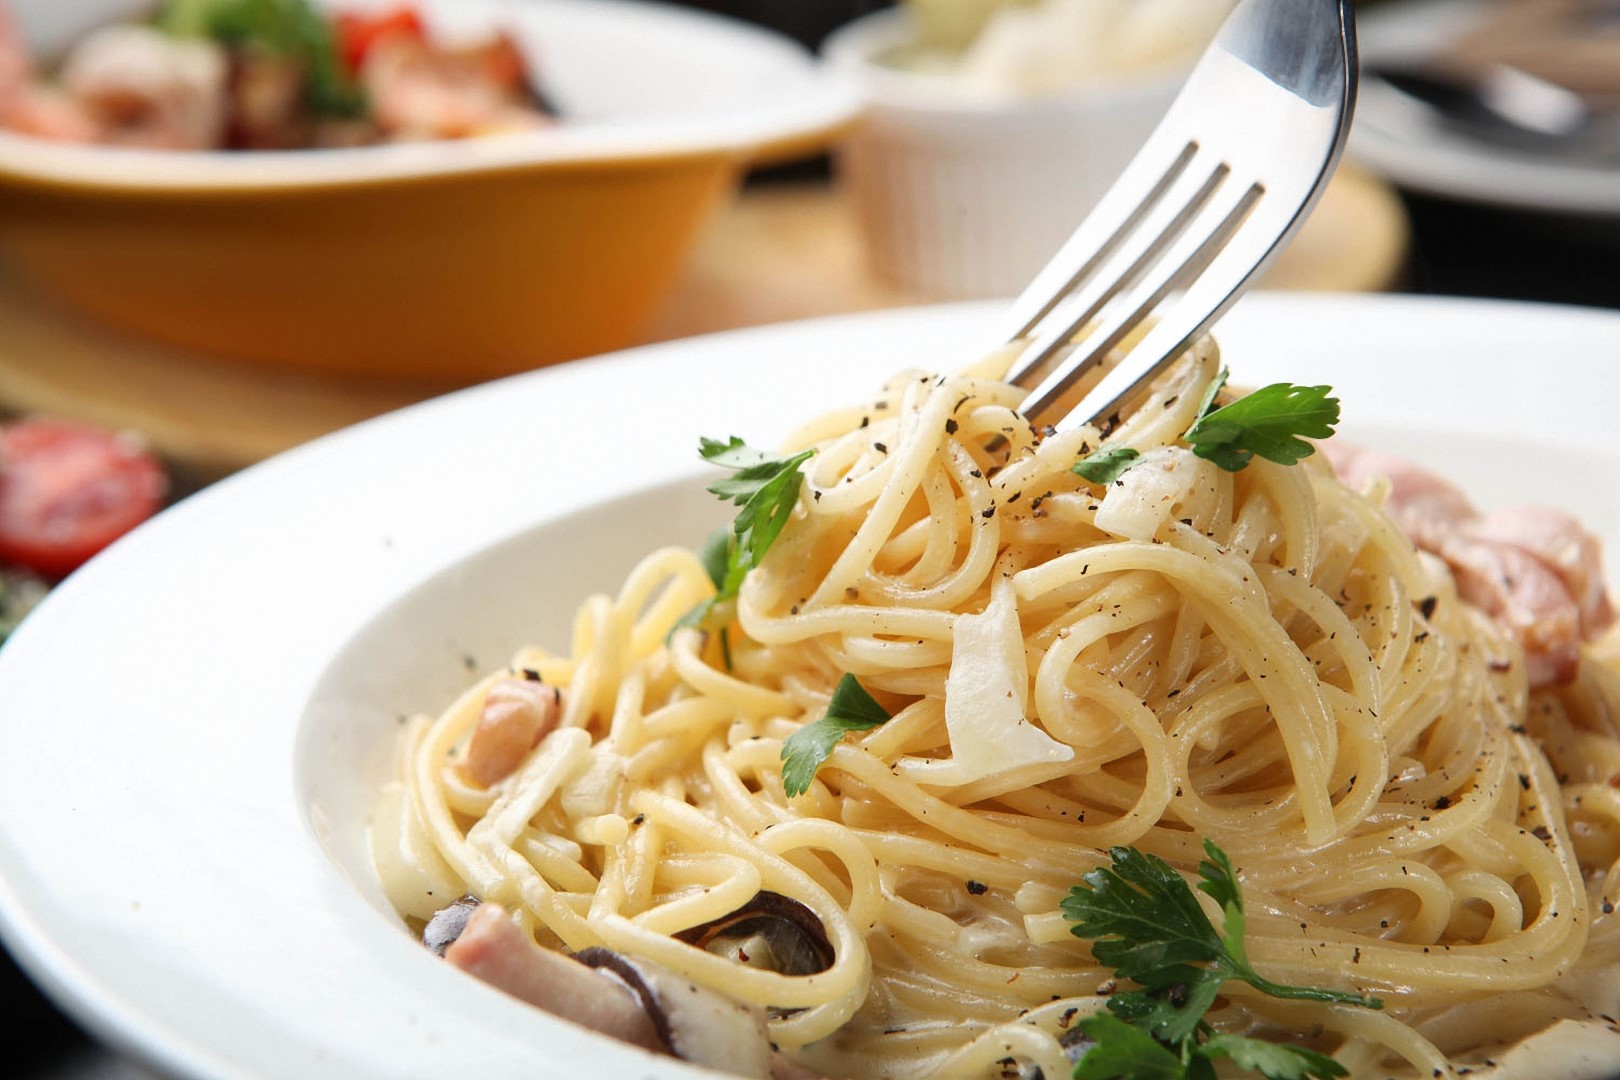 Simple meals - Pasta Carbonara